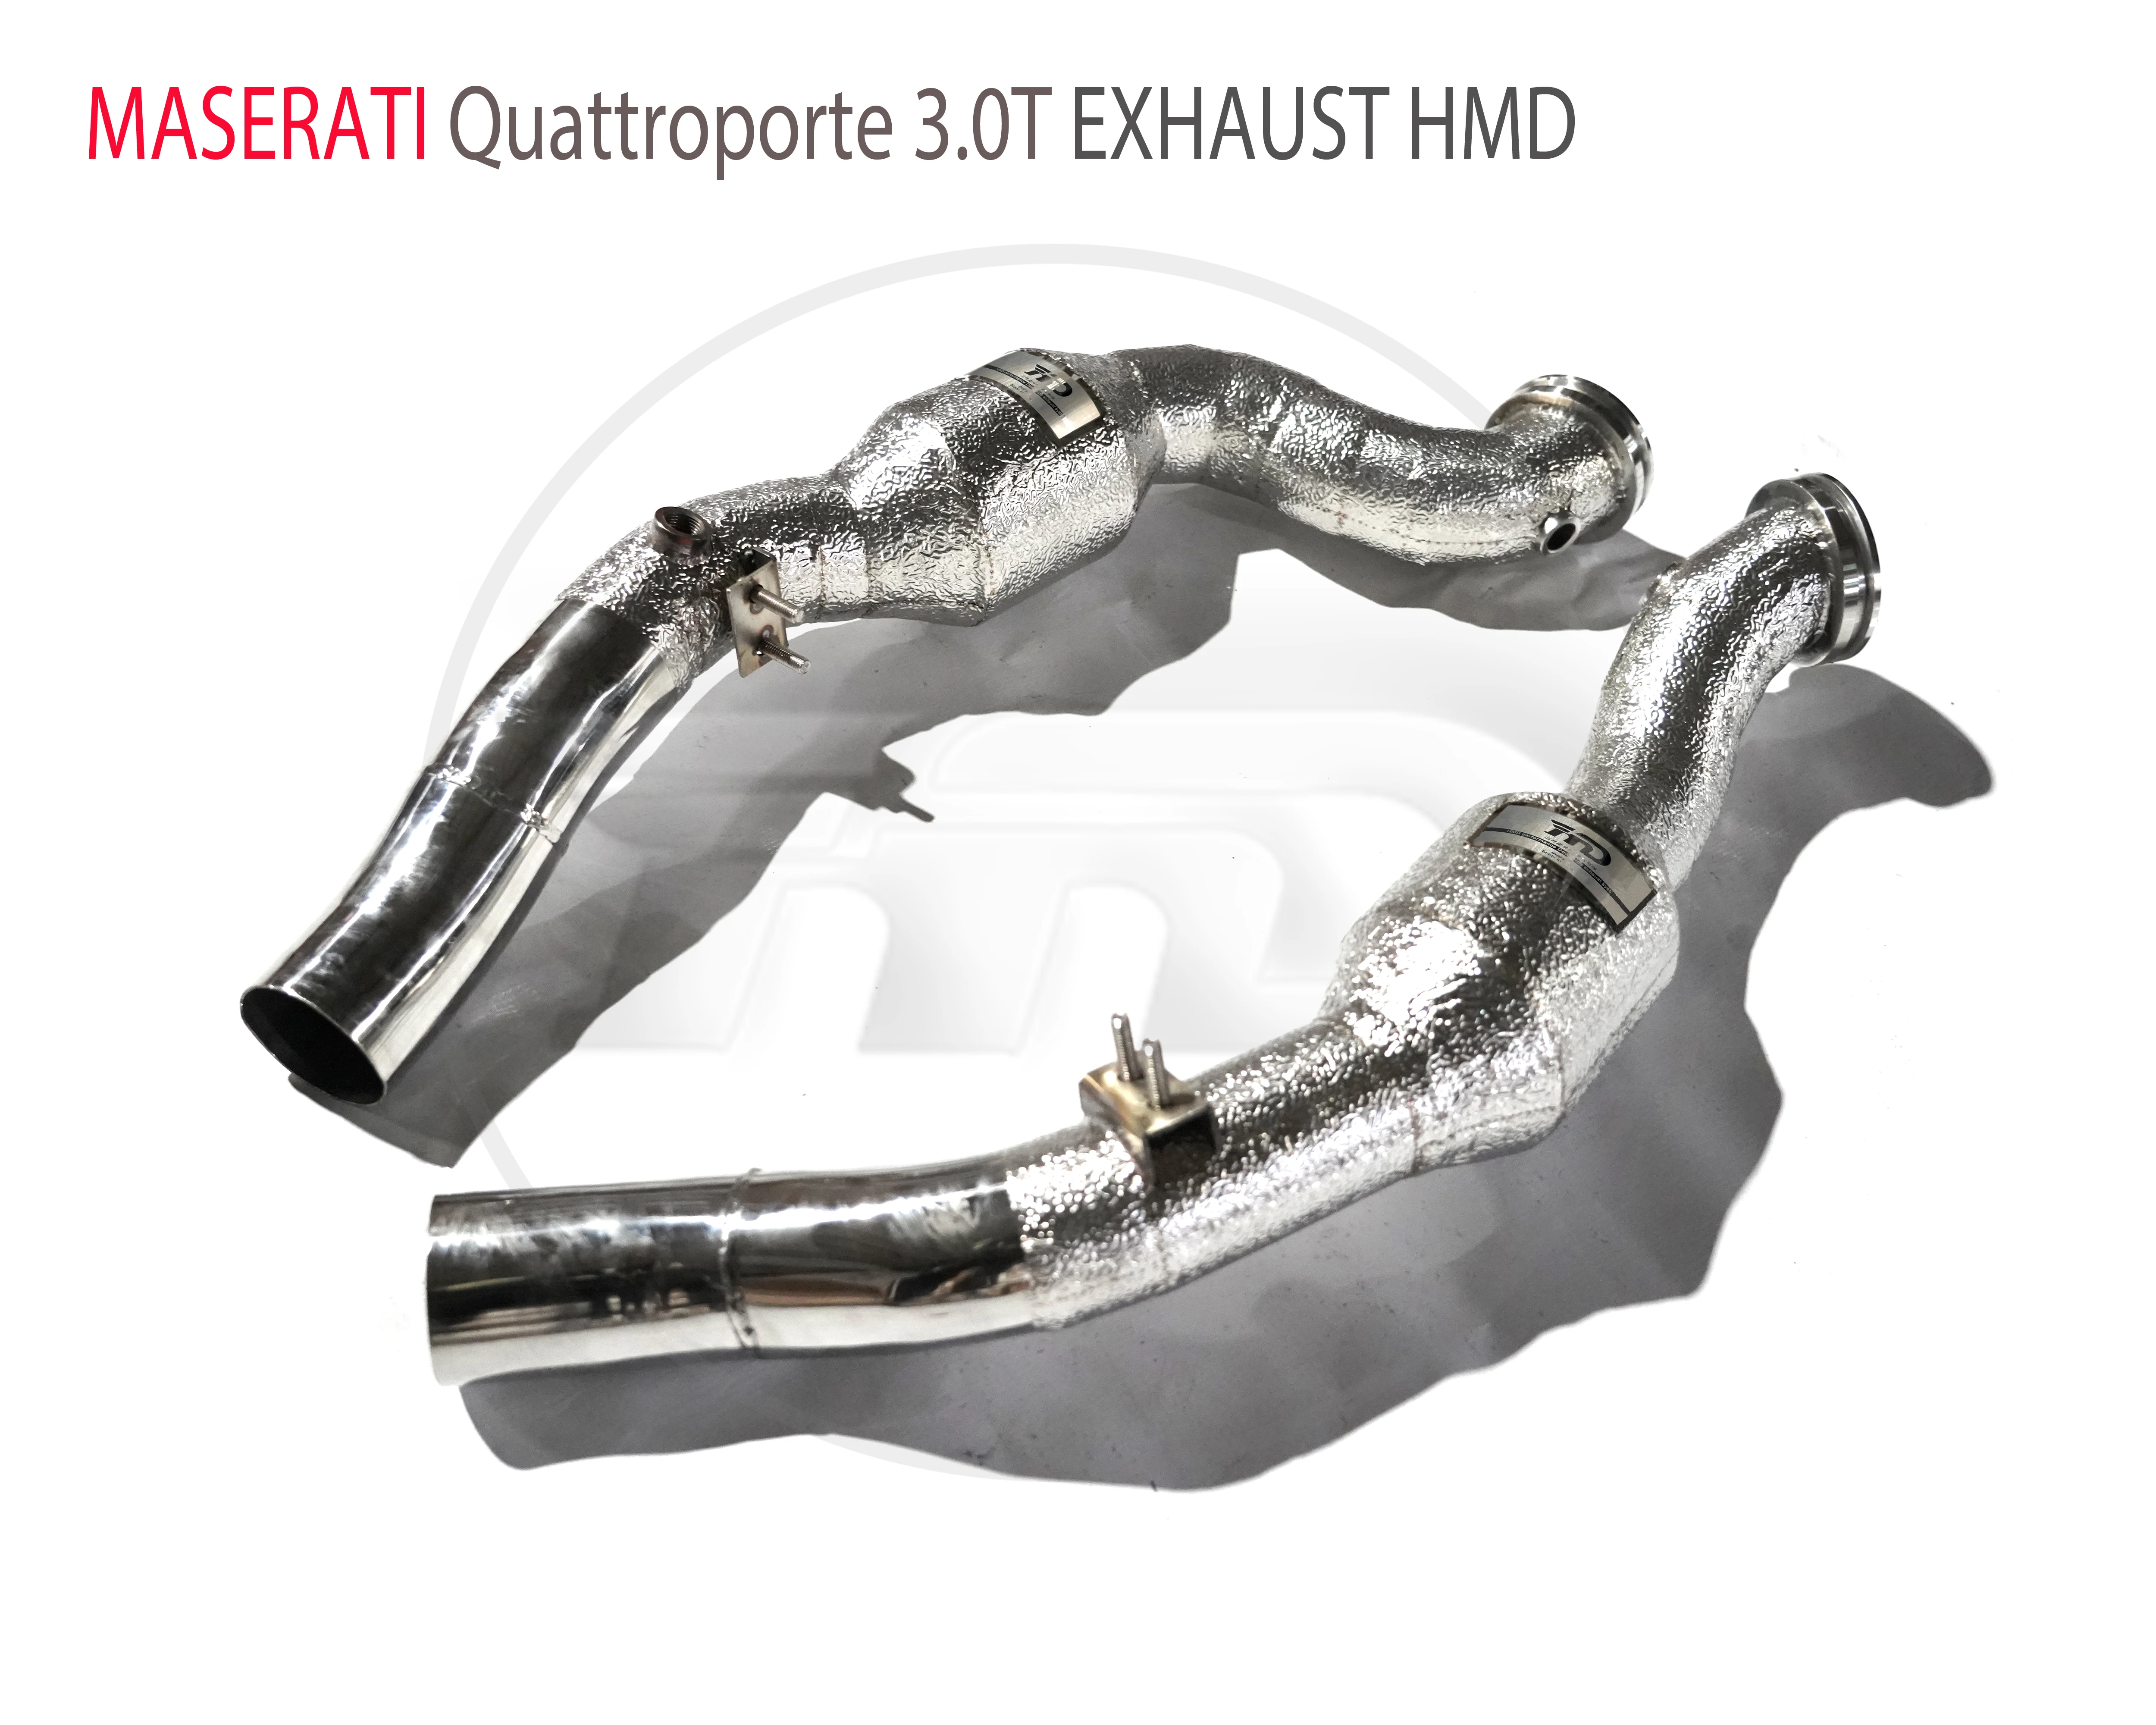 HMD נירוסטה סעפת פליטה עבור מזראטי Quattroporte 3.0 T אביזרי רכב עם קטליטי כותרת ללא חתול צינור . ' - ' . 1